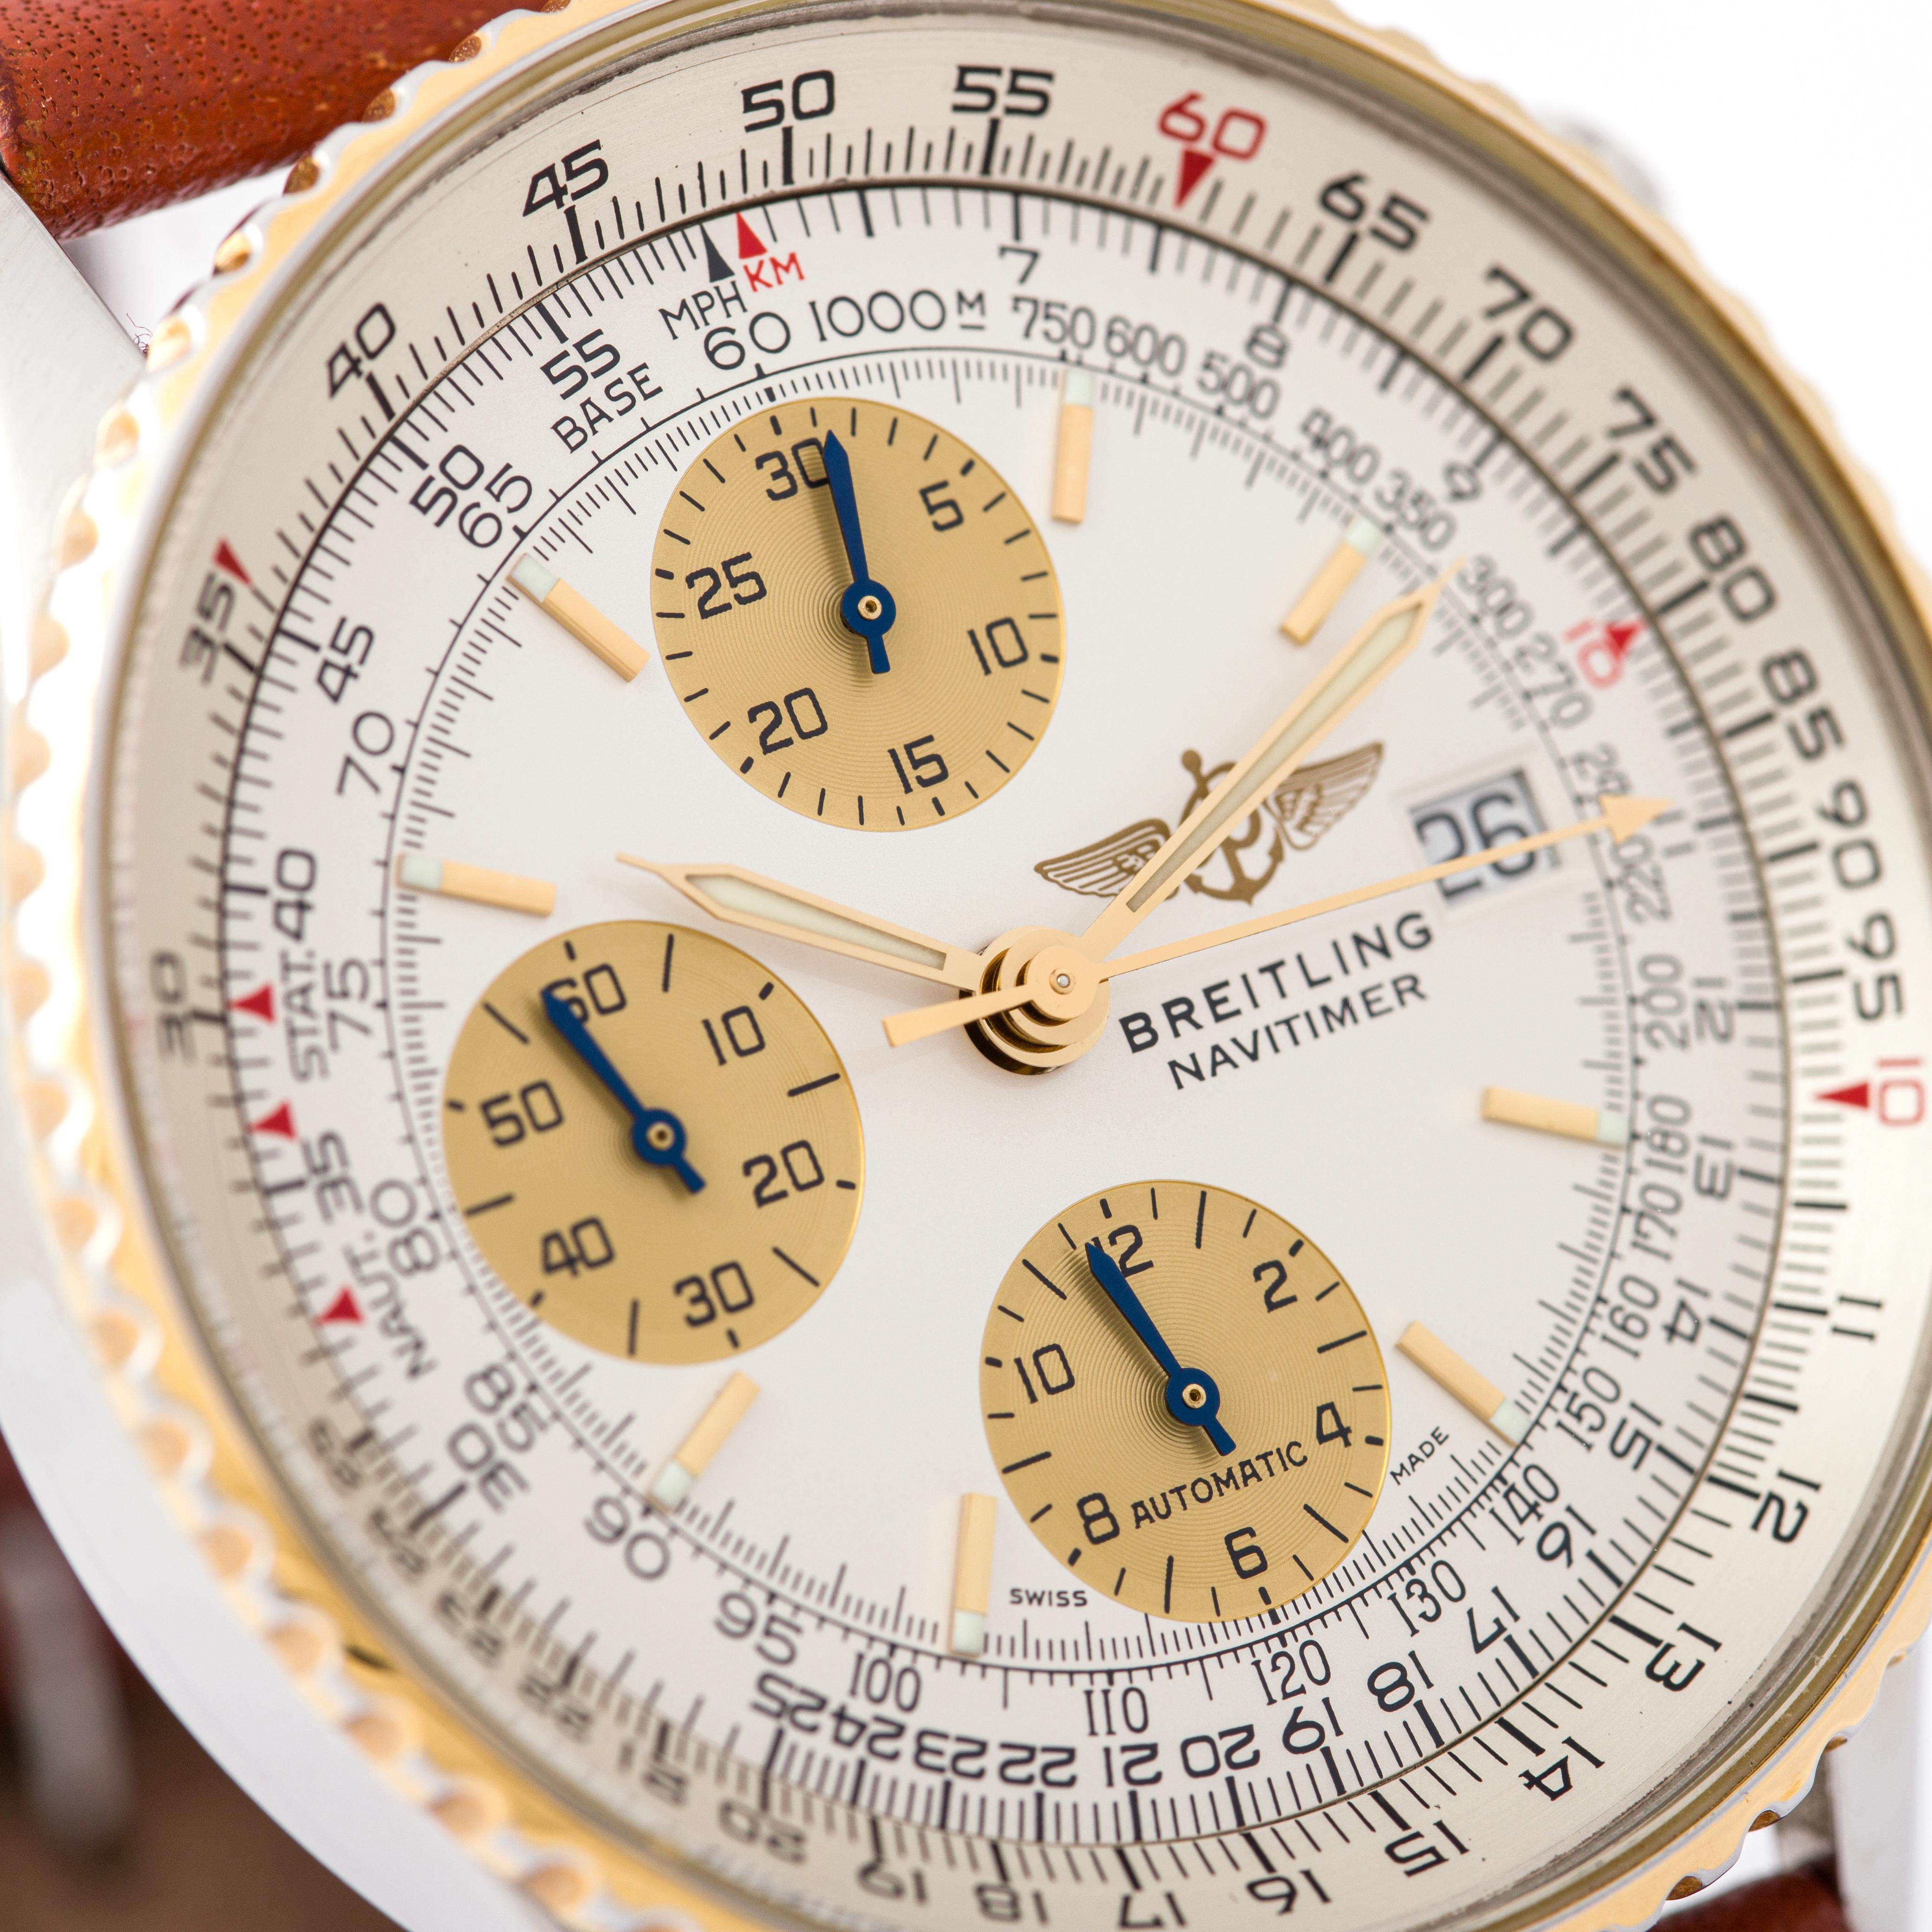 Breitling Navitimer Edelstahl Gelbgold-Armbanduhr 1990er Jahre im Angebot 3